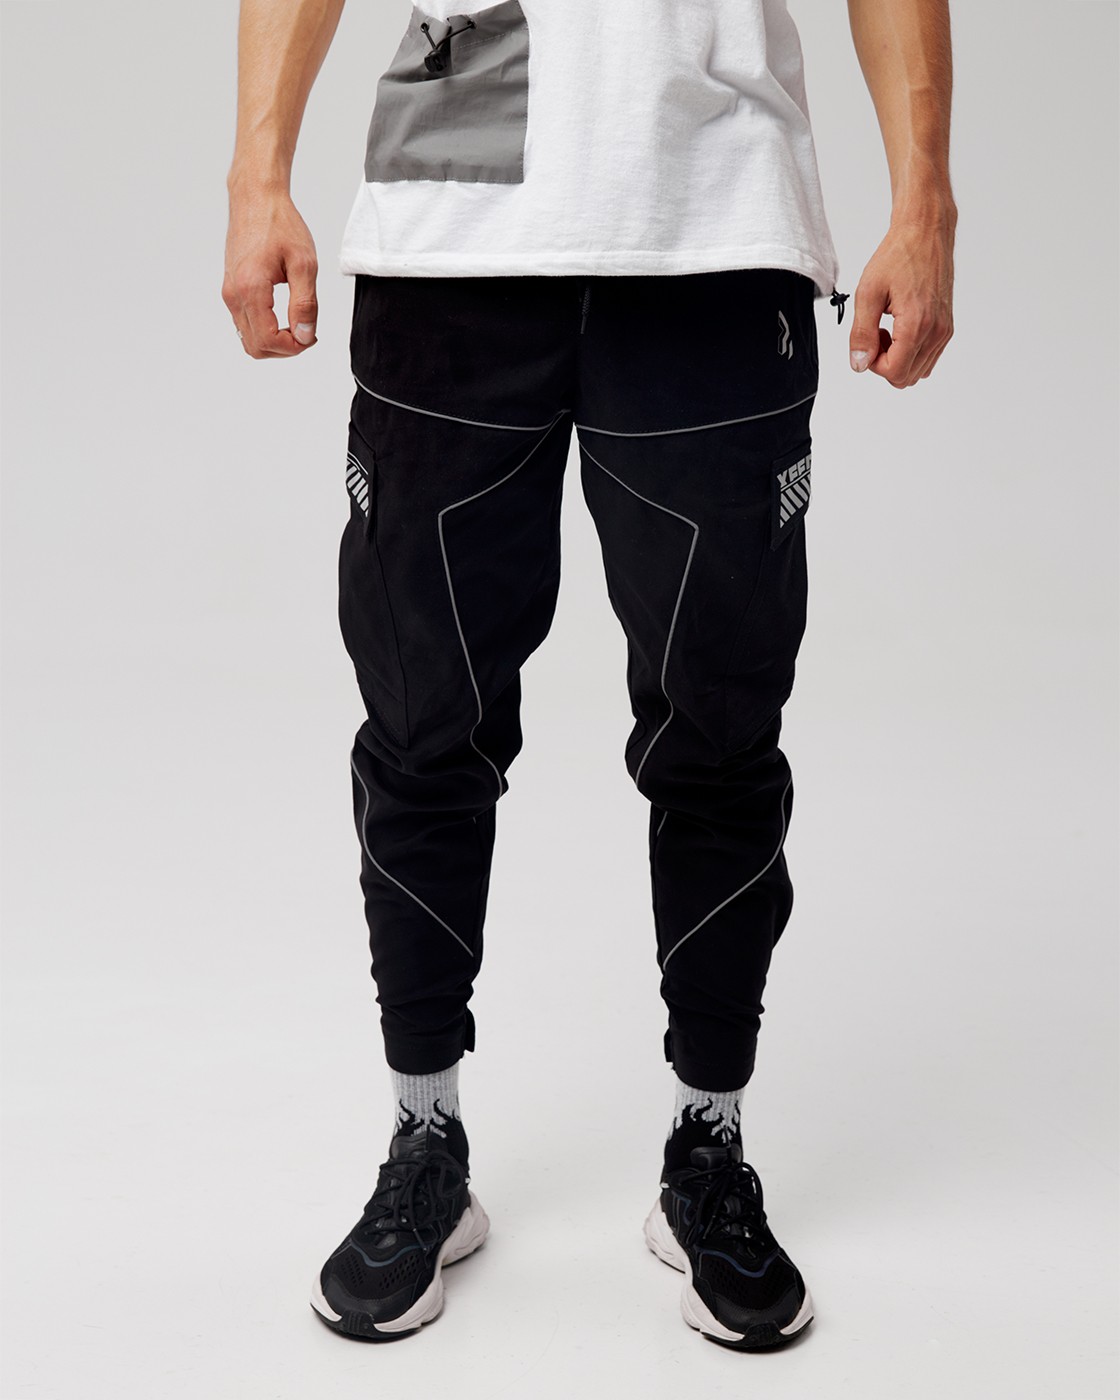 Men's warm cargo pants OGONPUSHKA Xeed black with reflectors